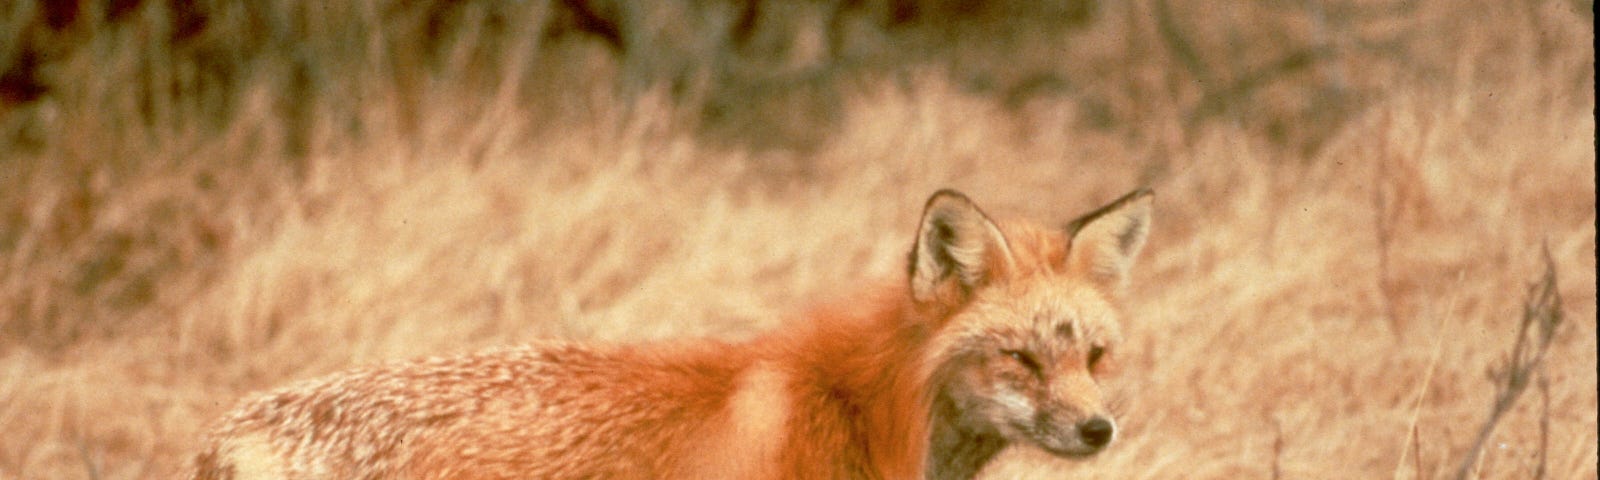 Sierra Nevada red fox walking through grass 